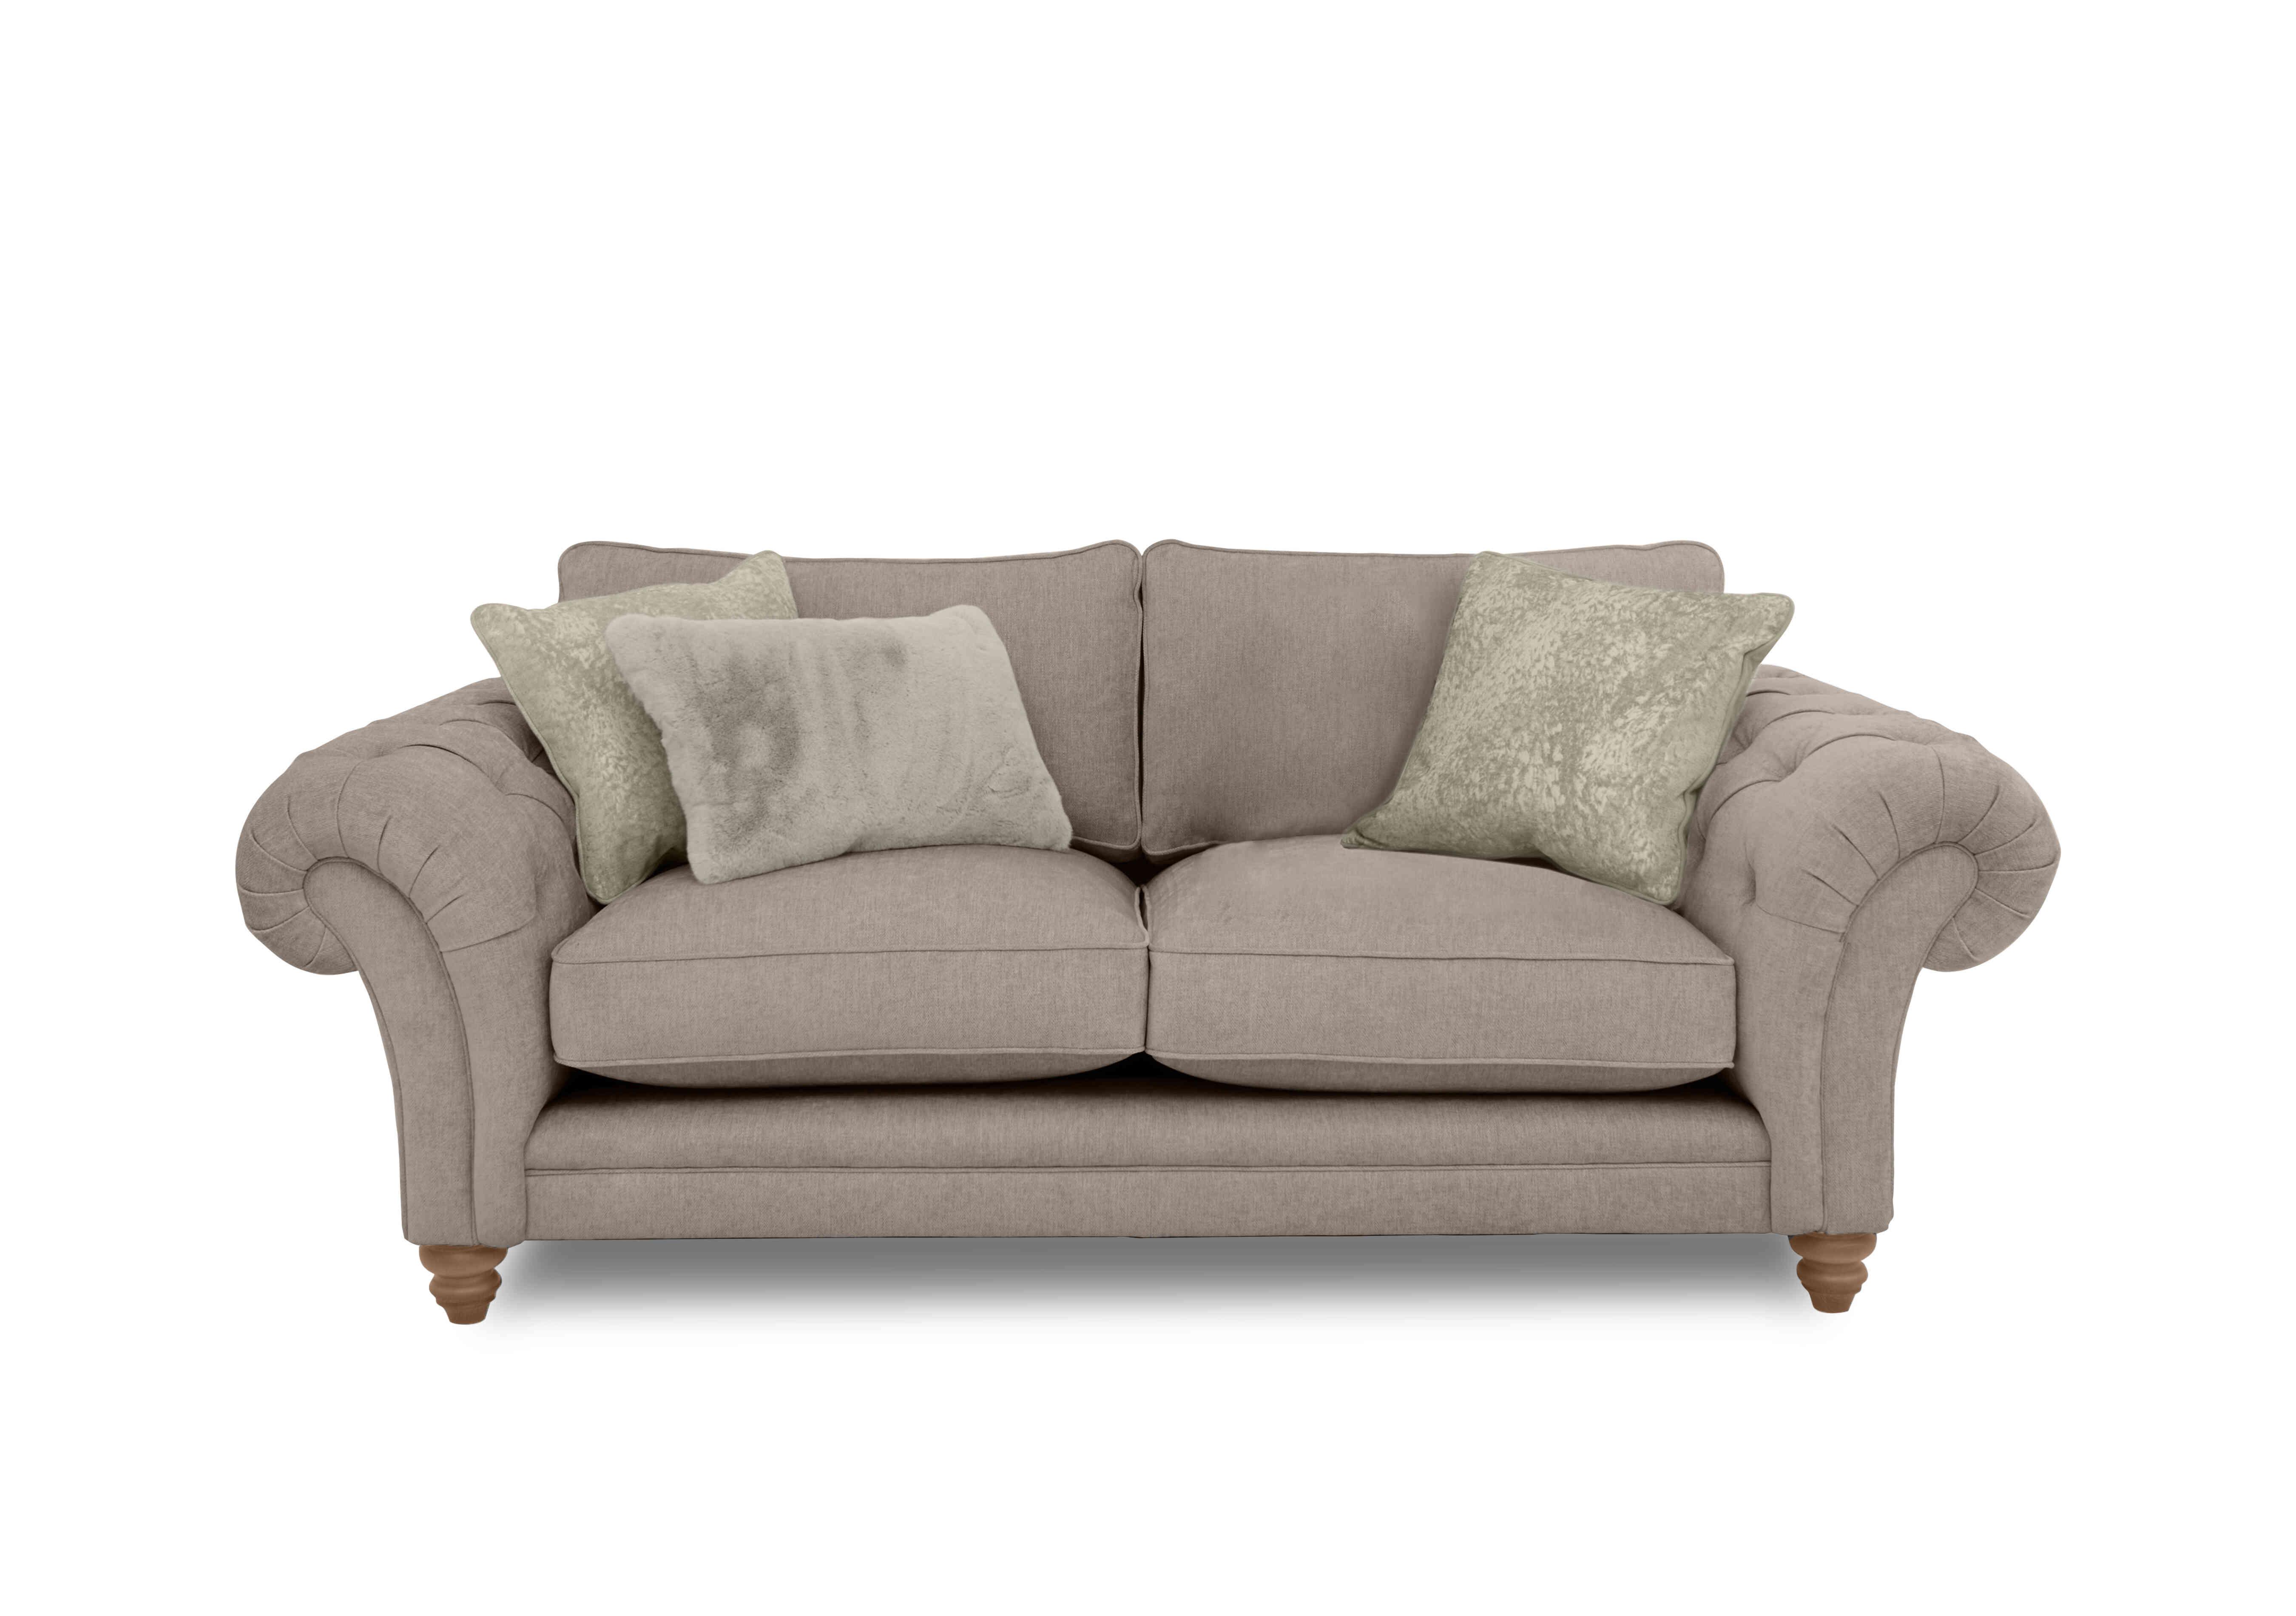 Blenheim 3 Seater Classic Back Sofa in Darwin Mink Of on Furniture Village